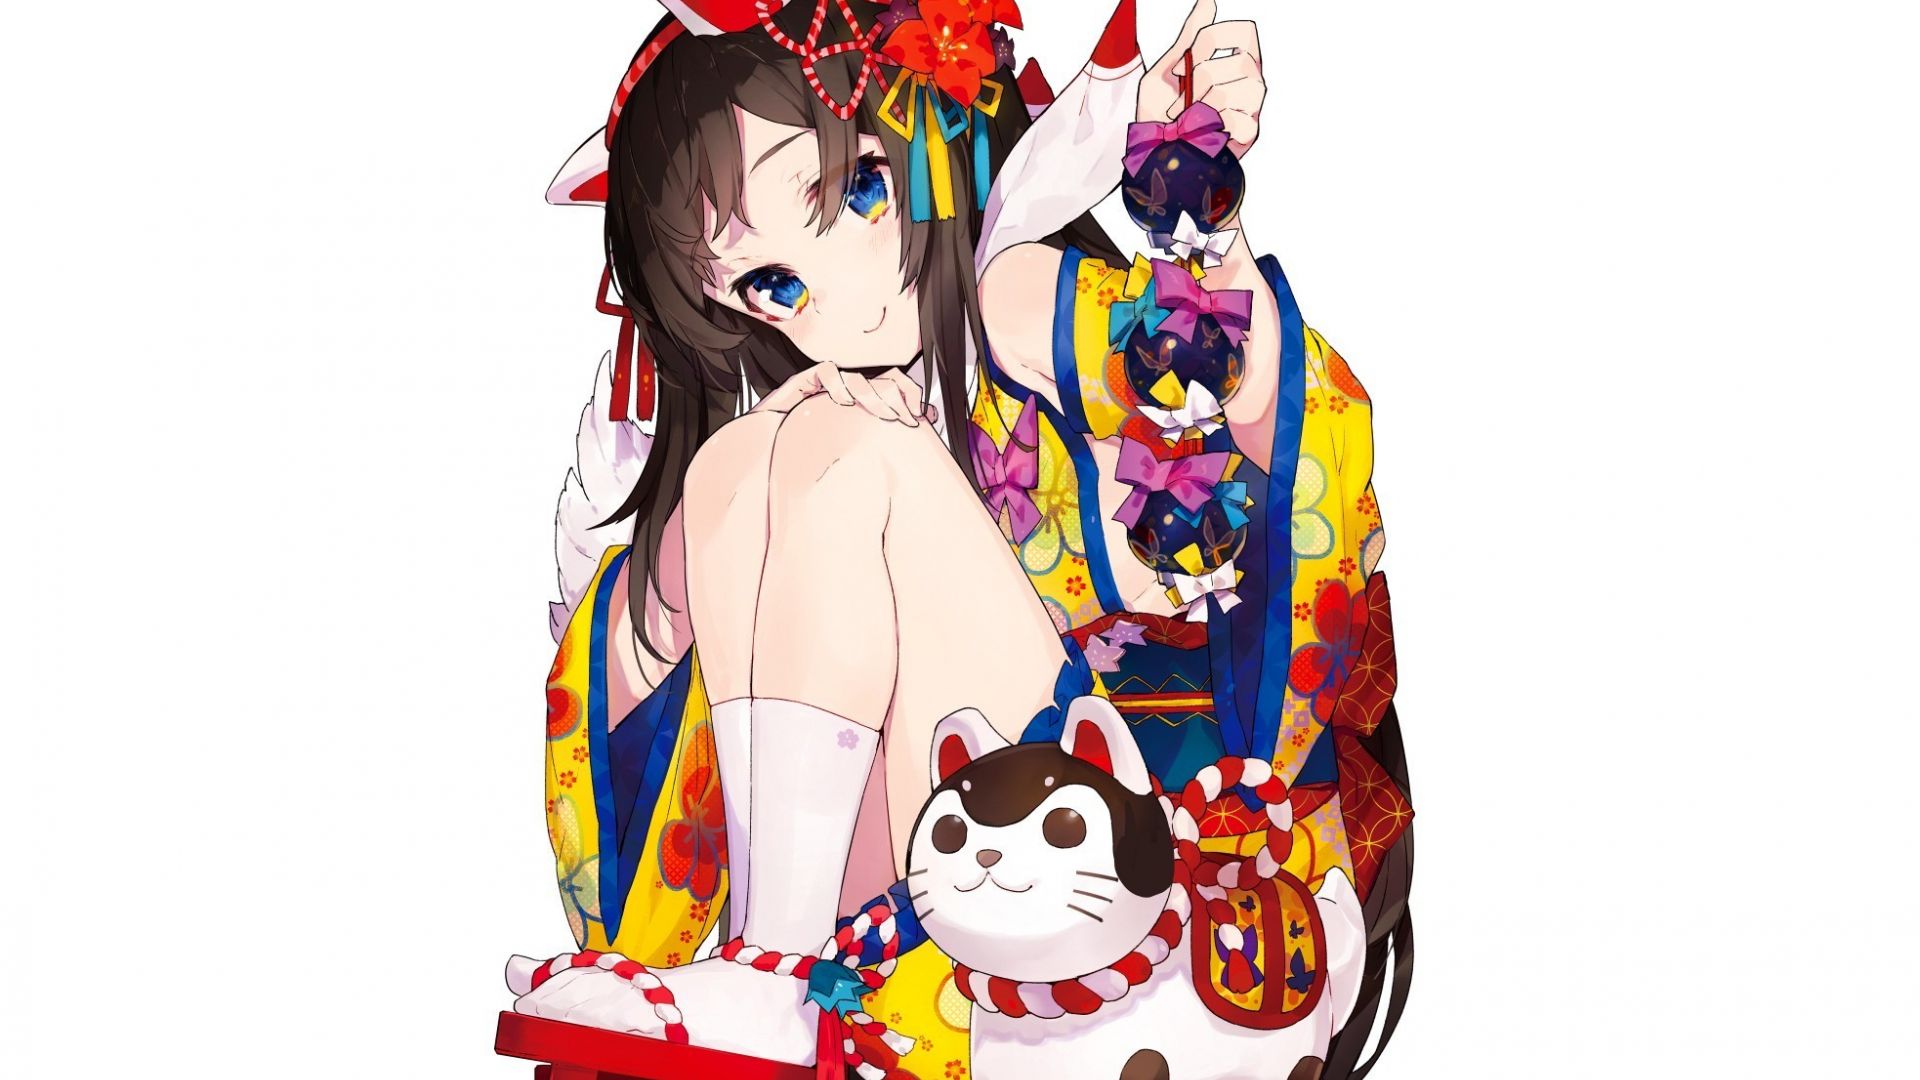 Wallpaper Cute, anime girl with kitten toy, minimal